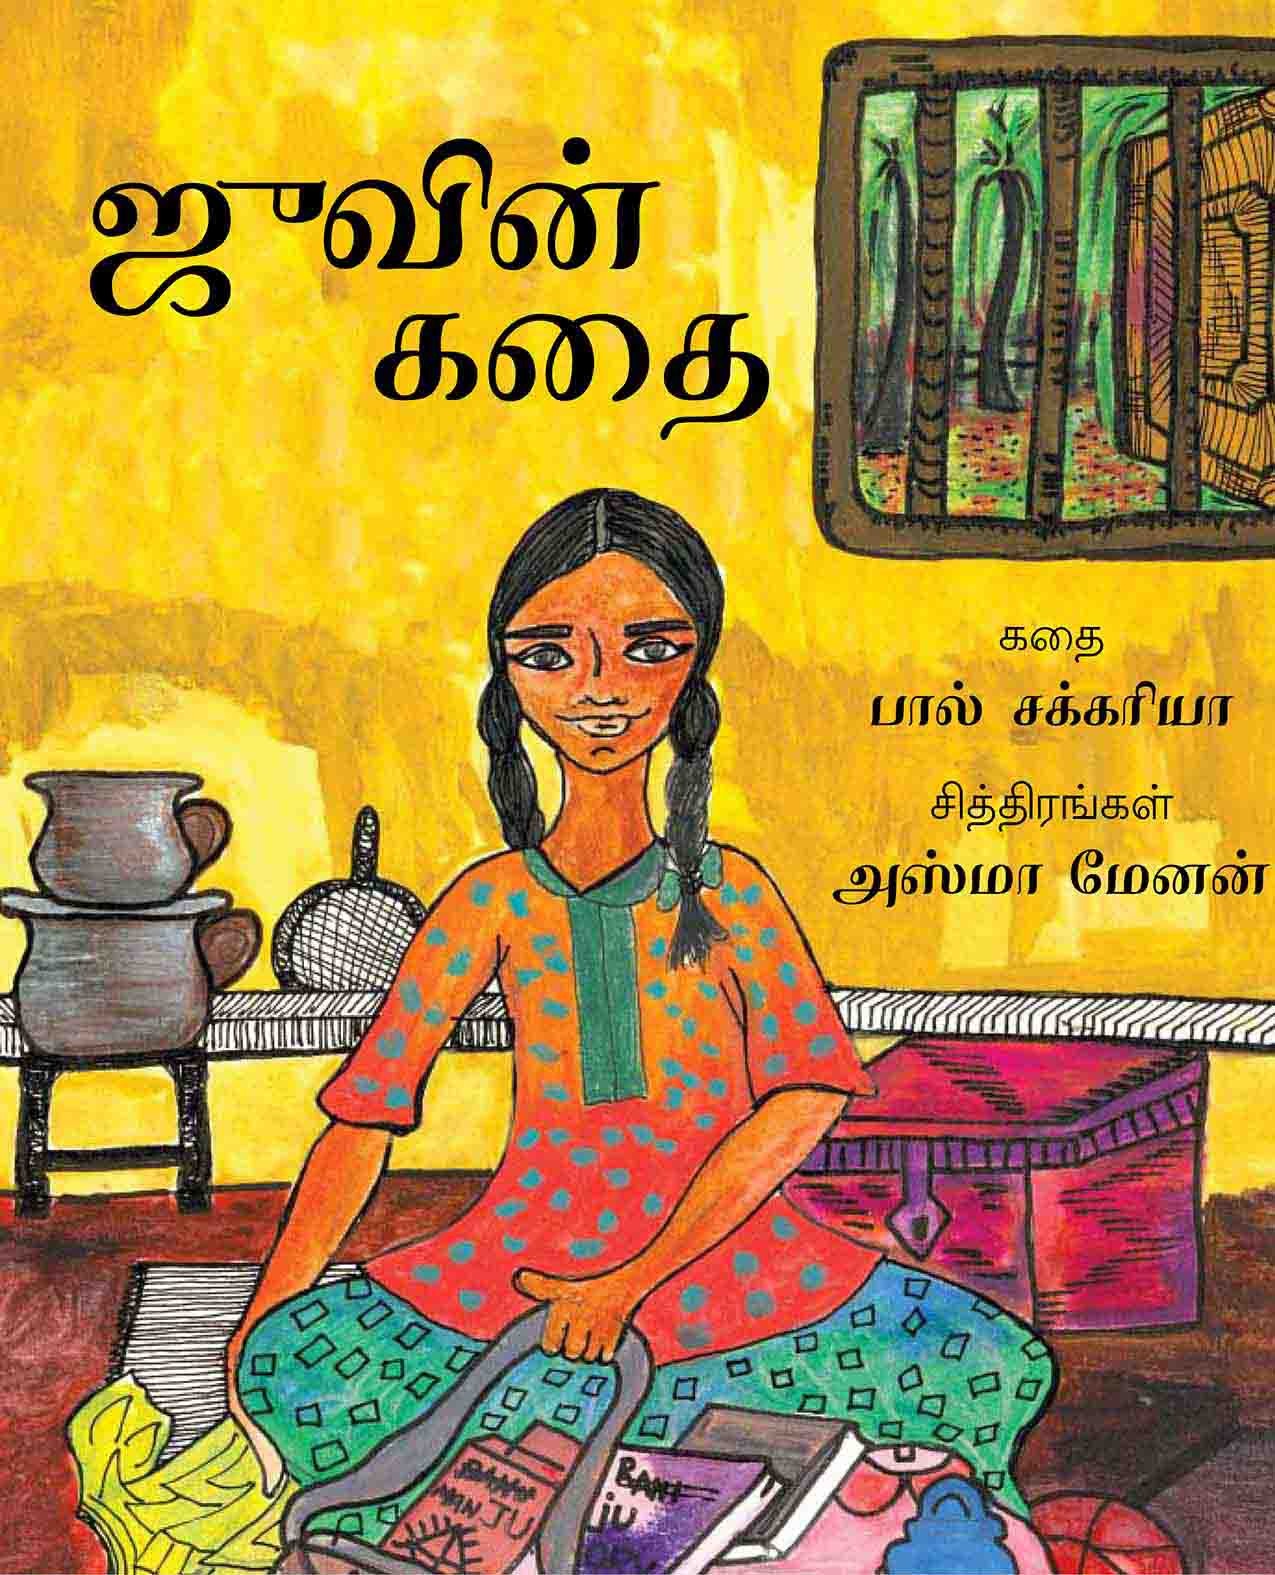 Ju's Story/Juvin Kathai (Tamil)